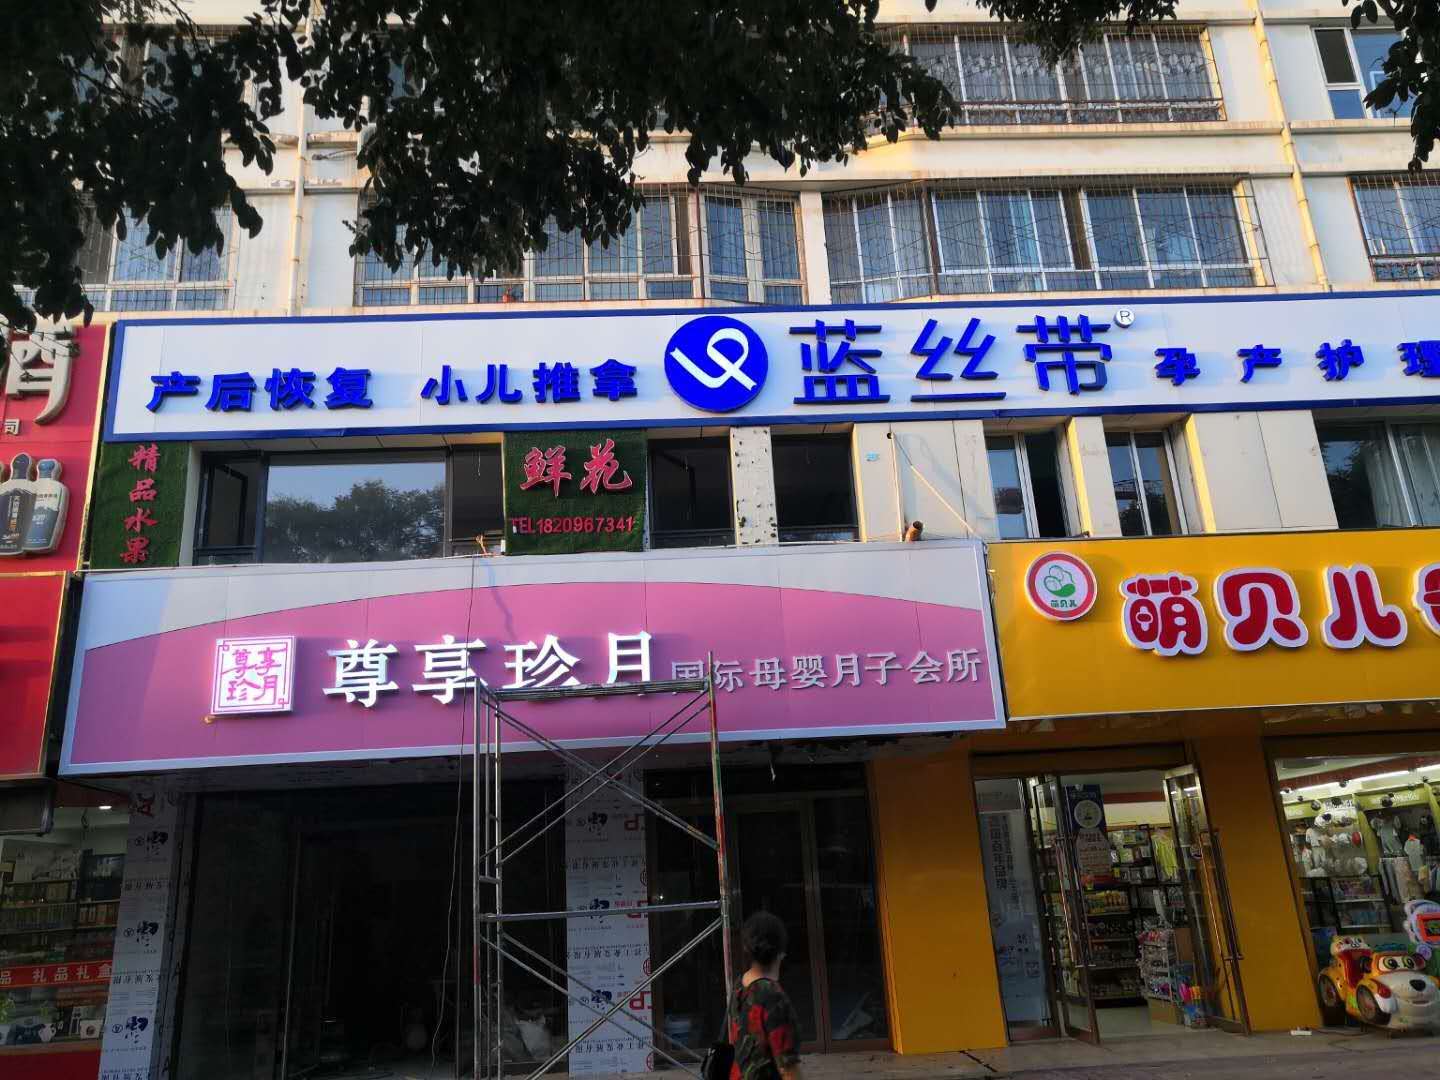 渭南公司门头牌匾 一站式服务